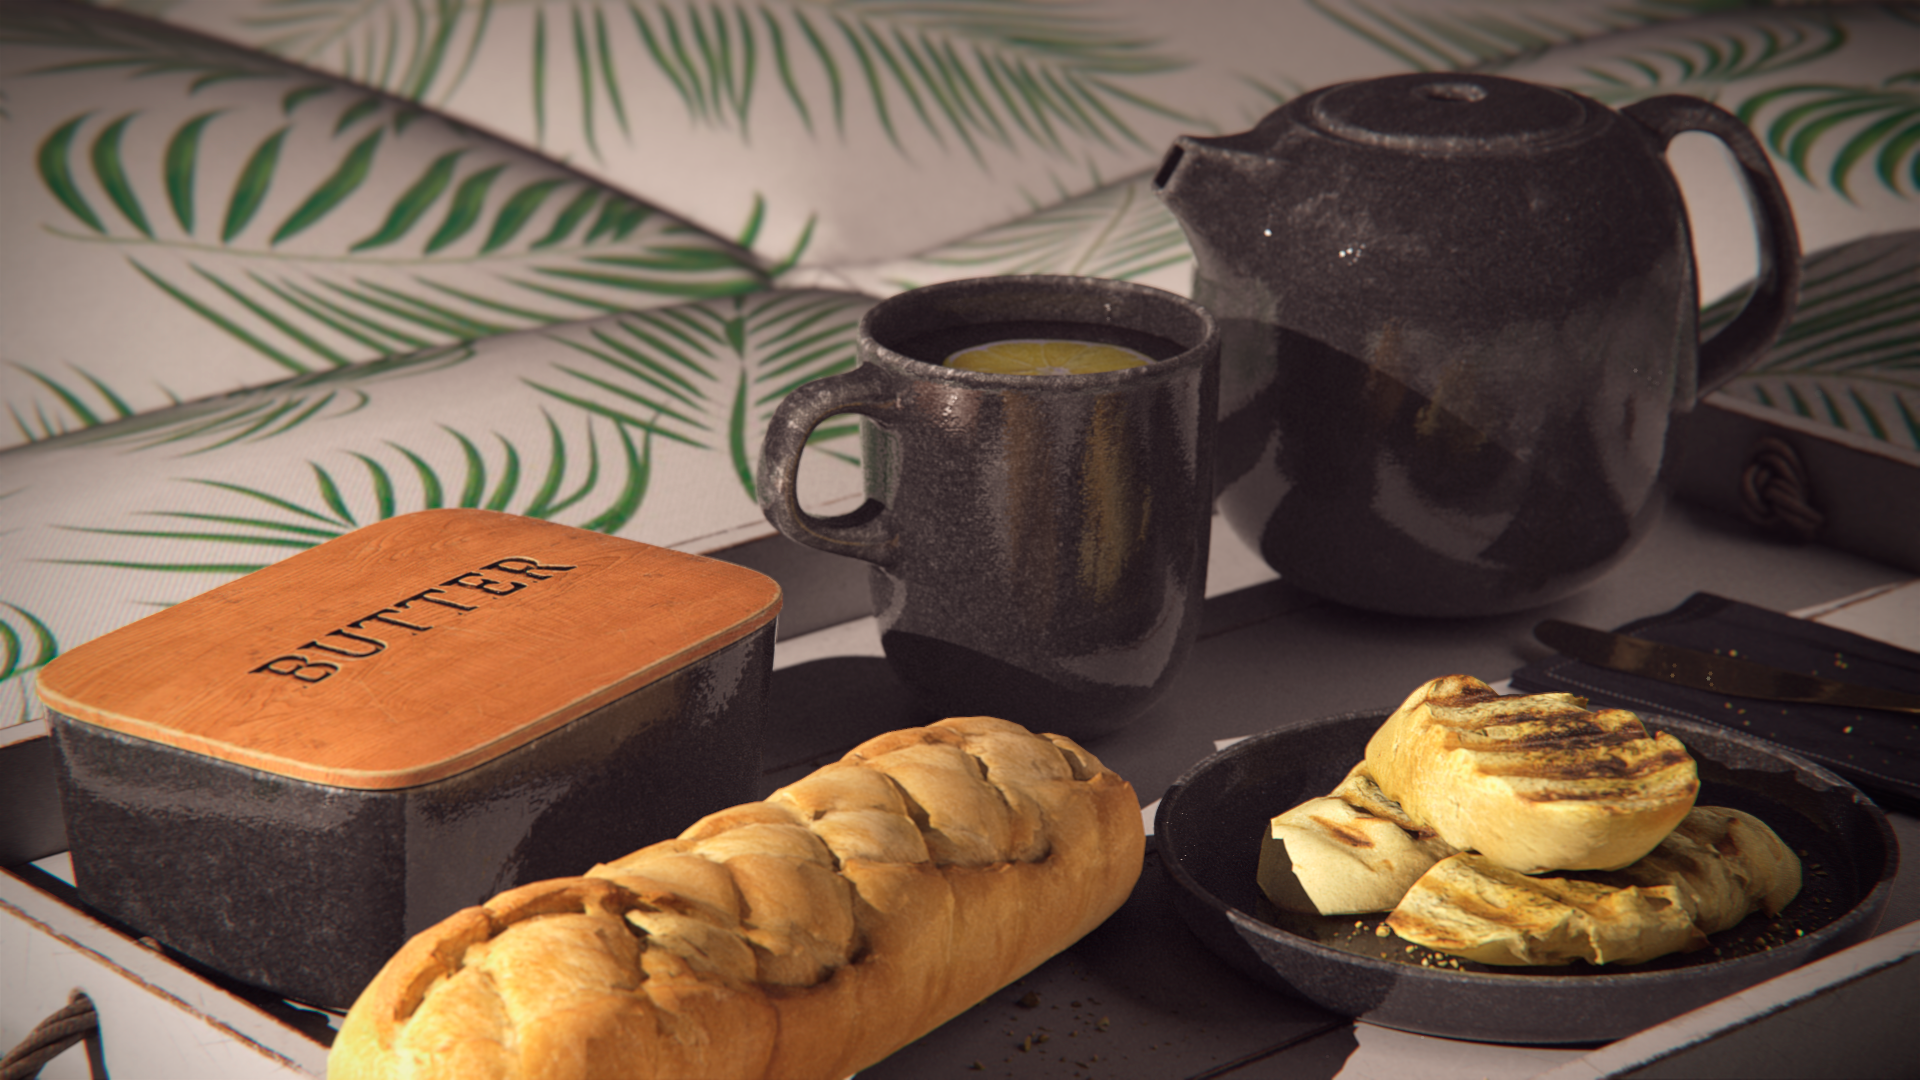 General 1920x1080 CGI digital art breakfast Bed & Breakfast tea bread food